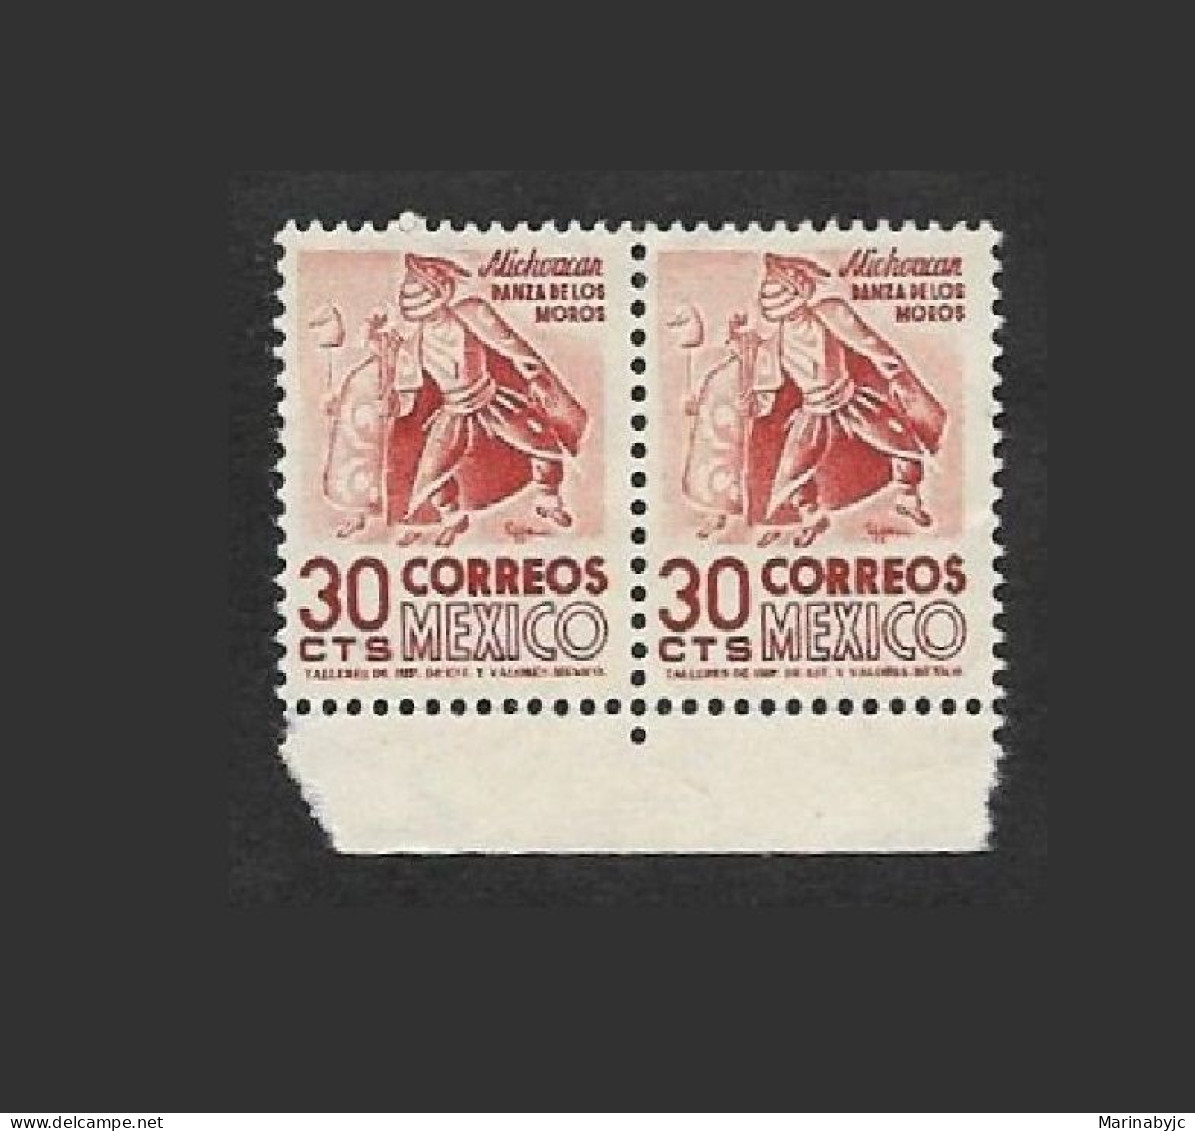 SE)1950-52 MEXICO, MICHOACÁN, DANCE OF THE MOORS 30C SCT879, WMK. 350, B/2 MNH - Mexico